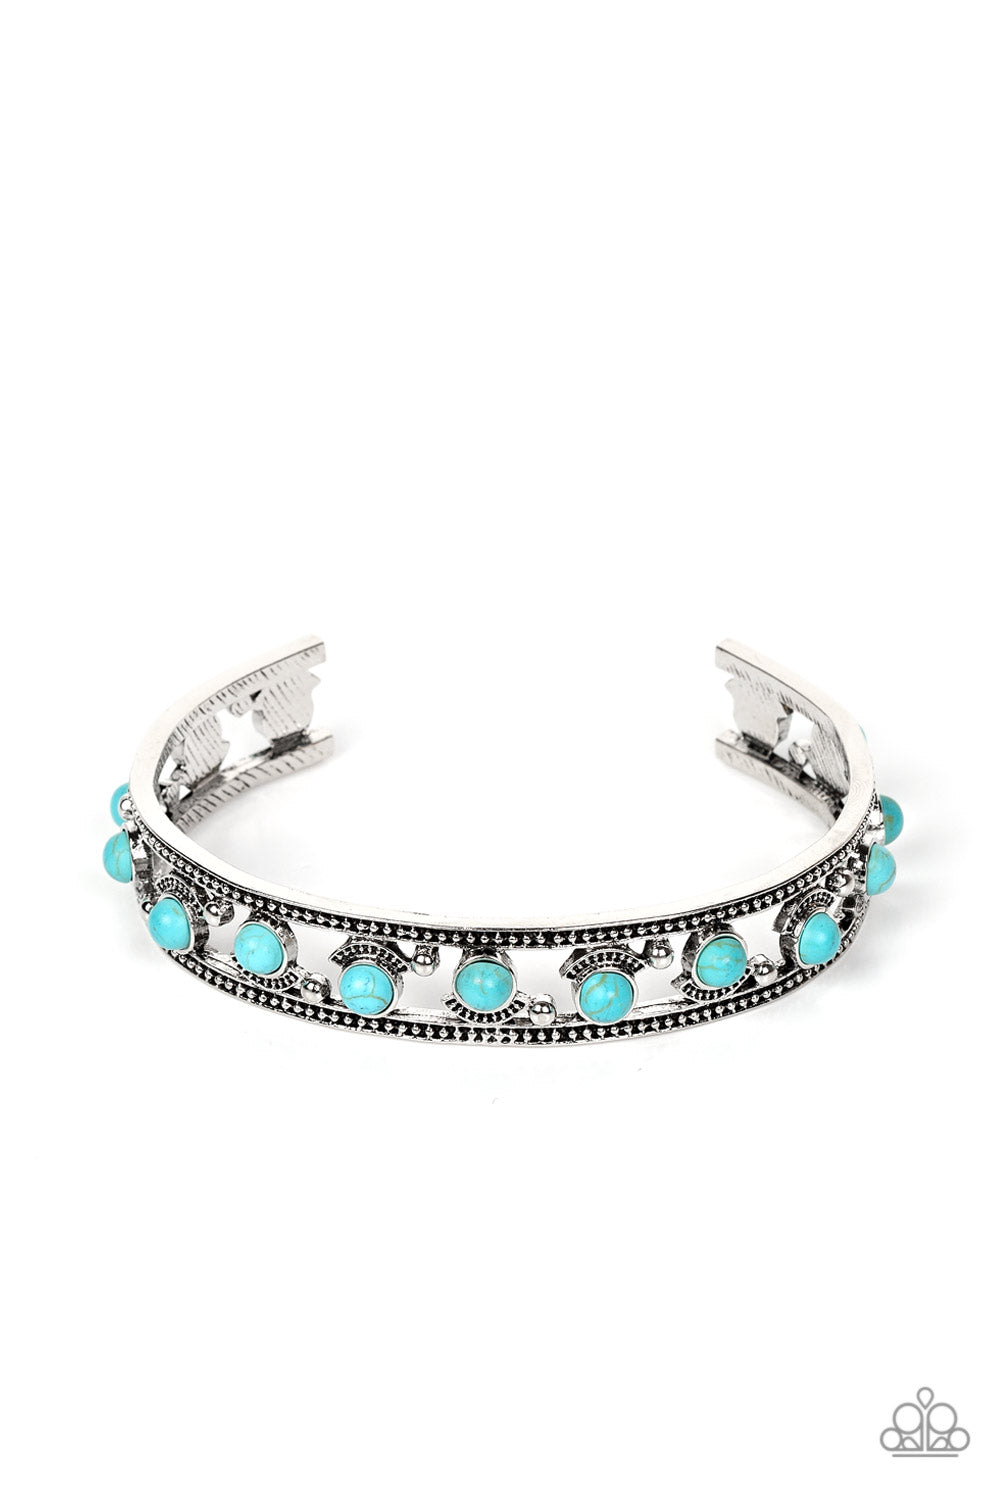 Badlands Bliss Paparazzi Accessories Cuff Bracelet Blue